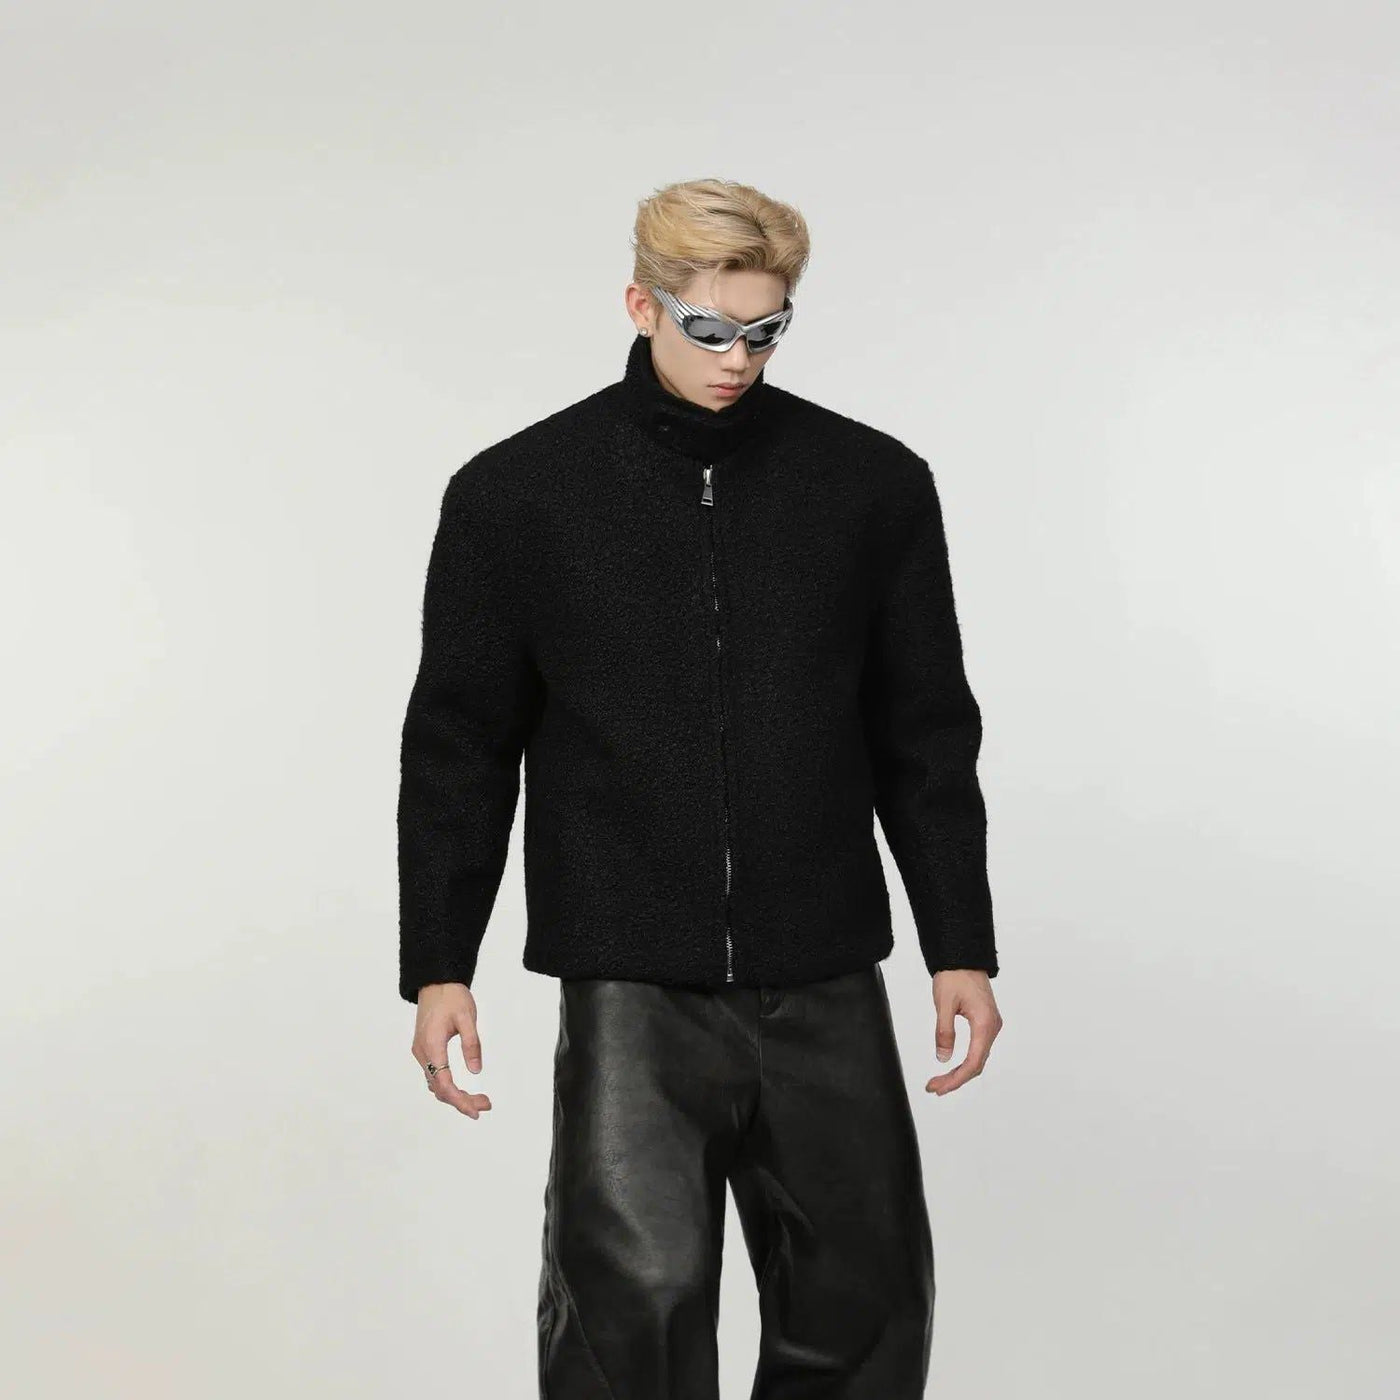 Solid Color Sherpa Jacket Korean Street Fashion Jacket By Turn Tide Shop Online at OH Vault